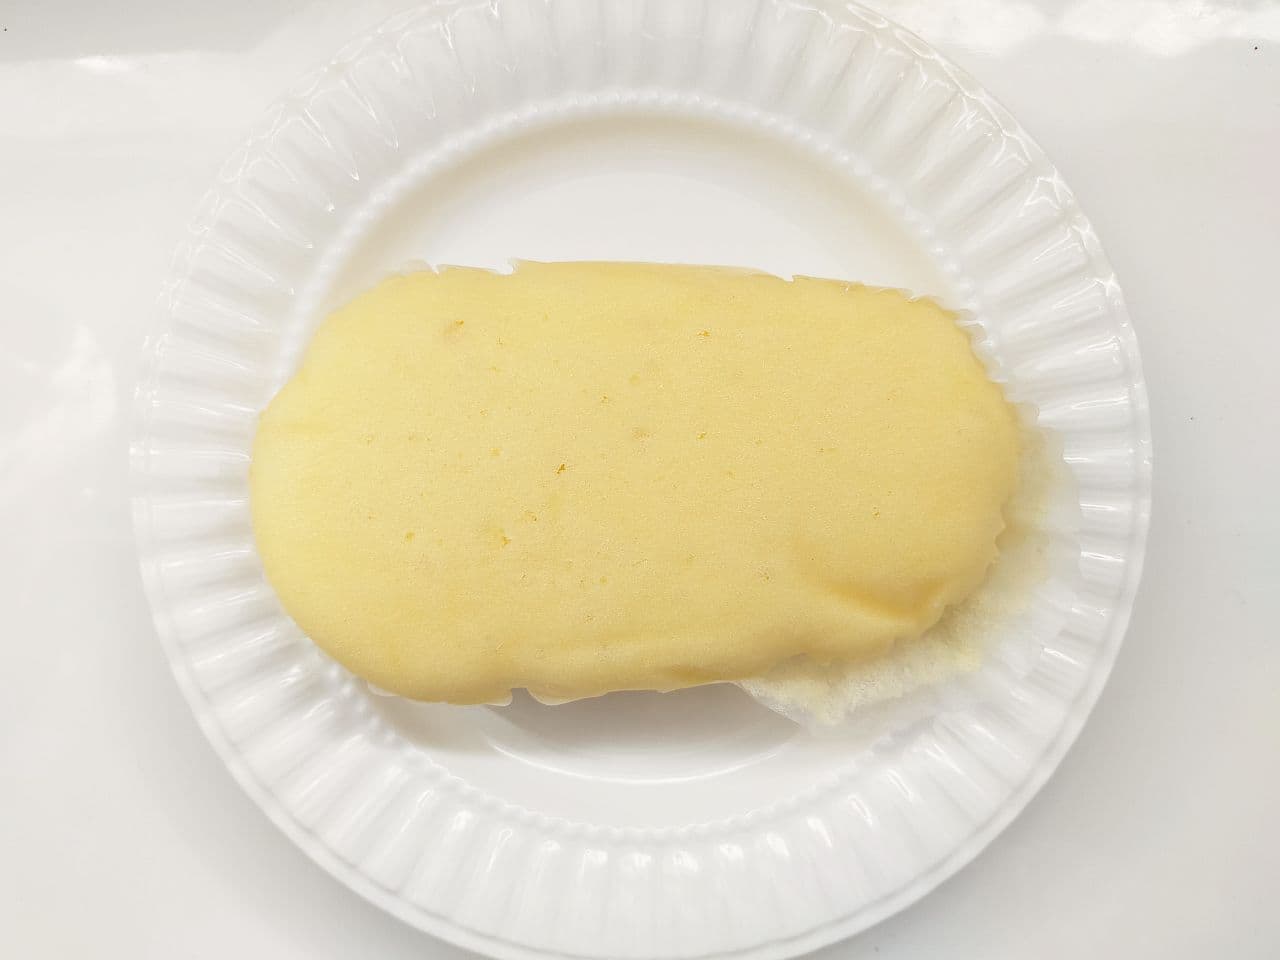 KALDI "Steamed Goku Cheese Bread Made with Hokkaido Mascarpone"